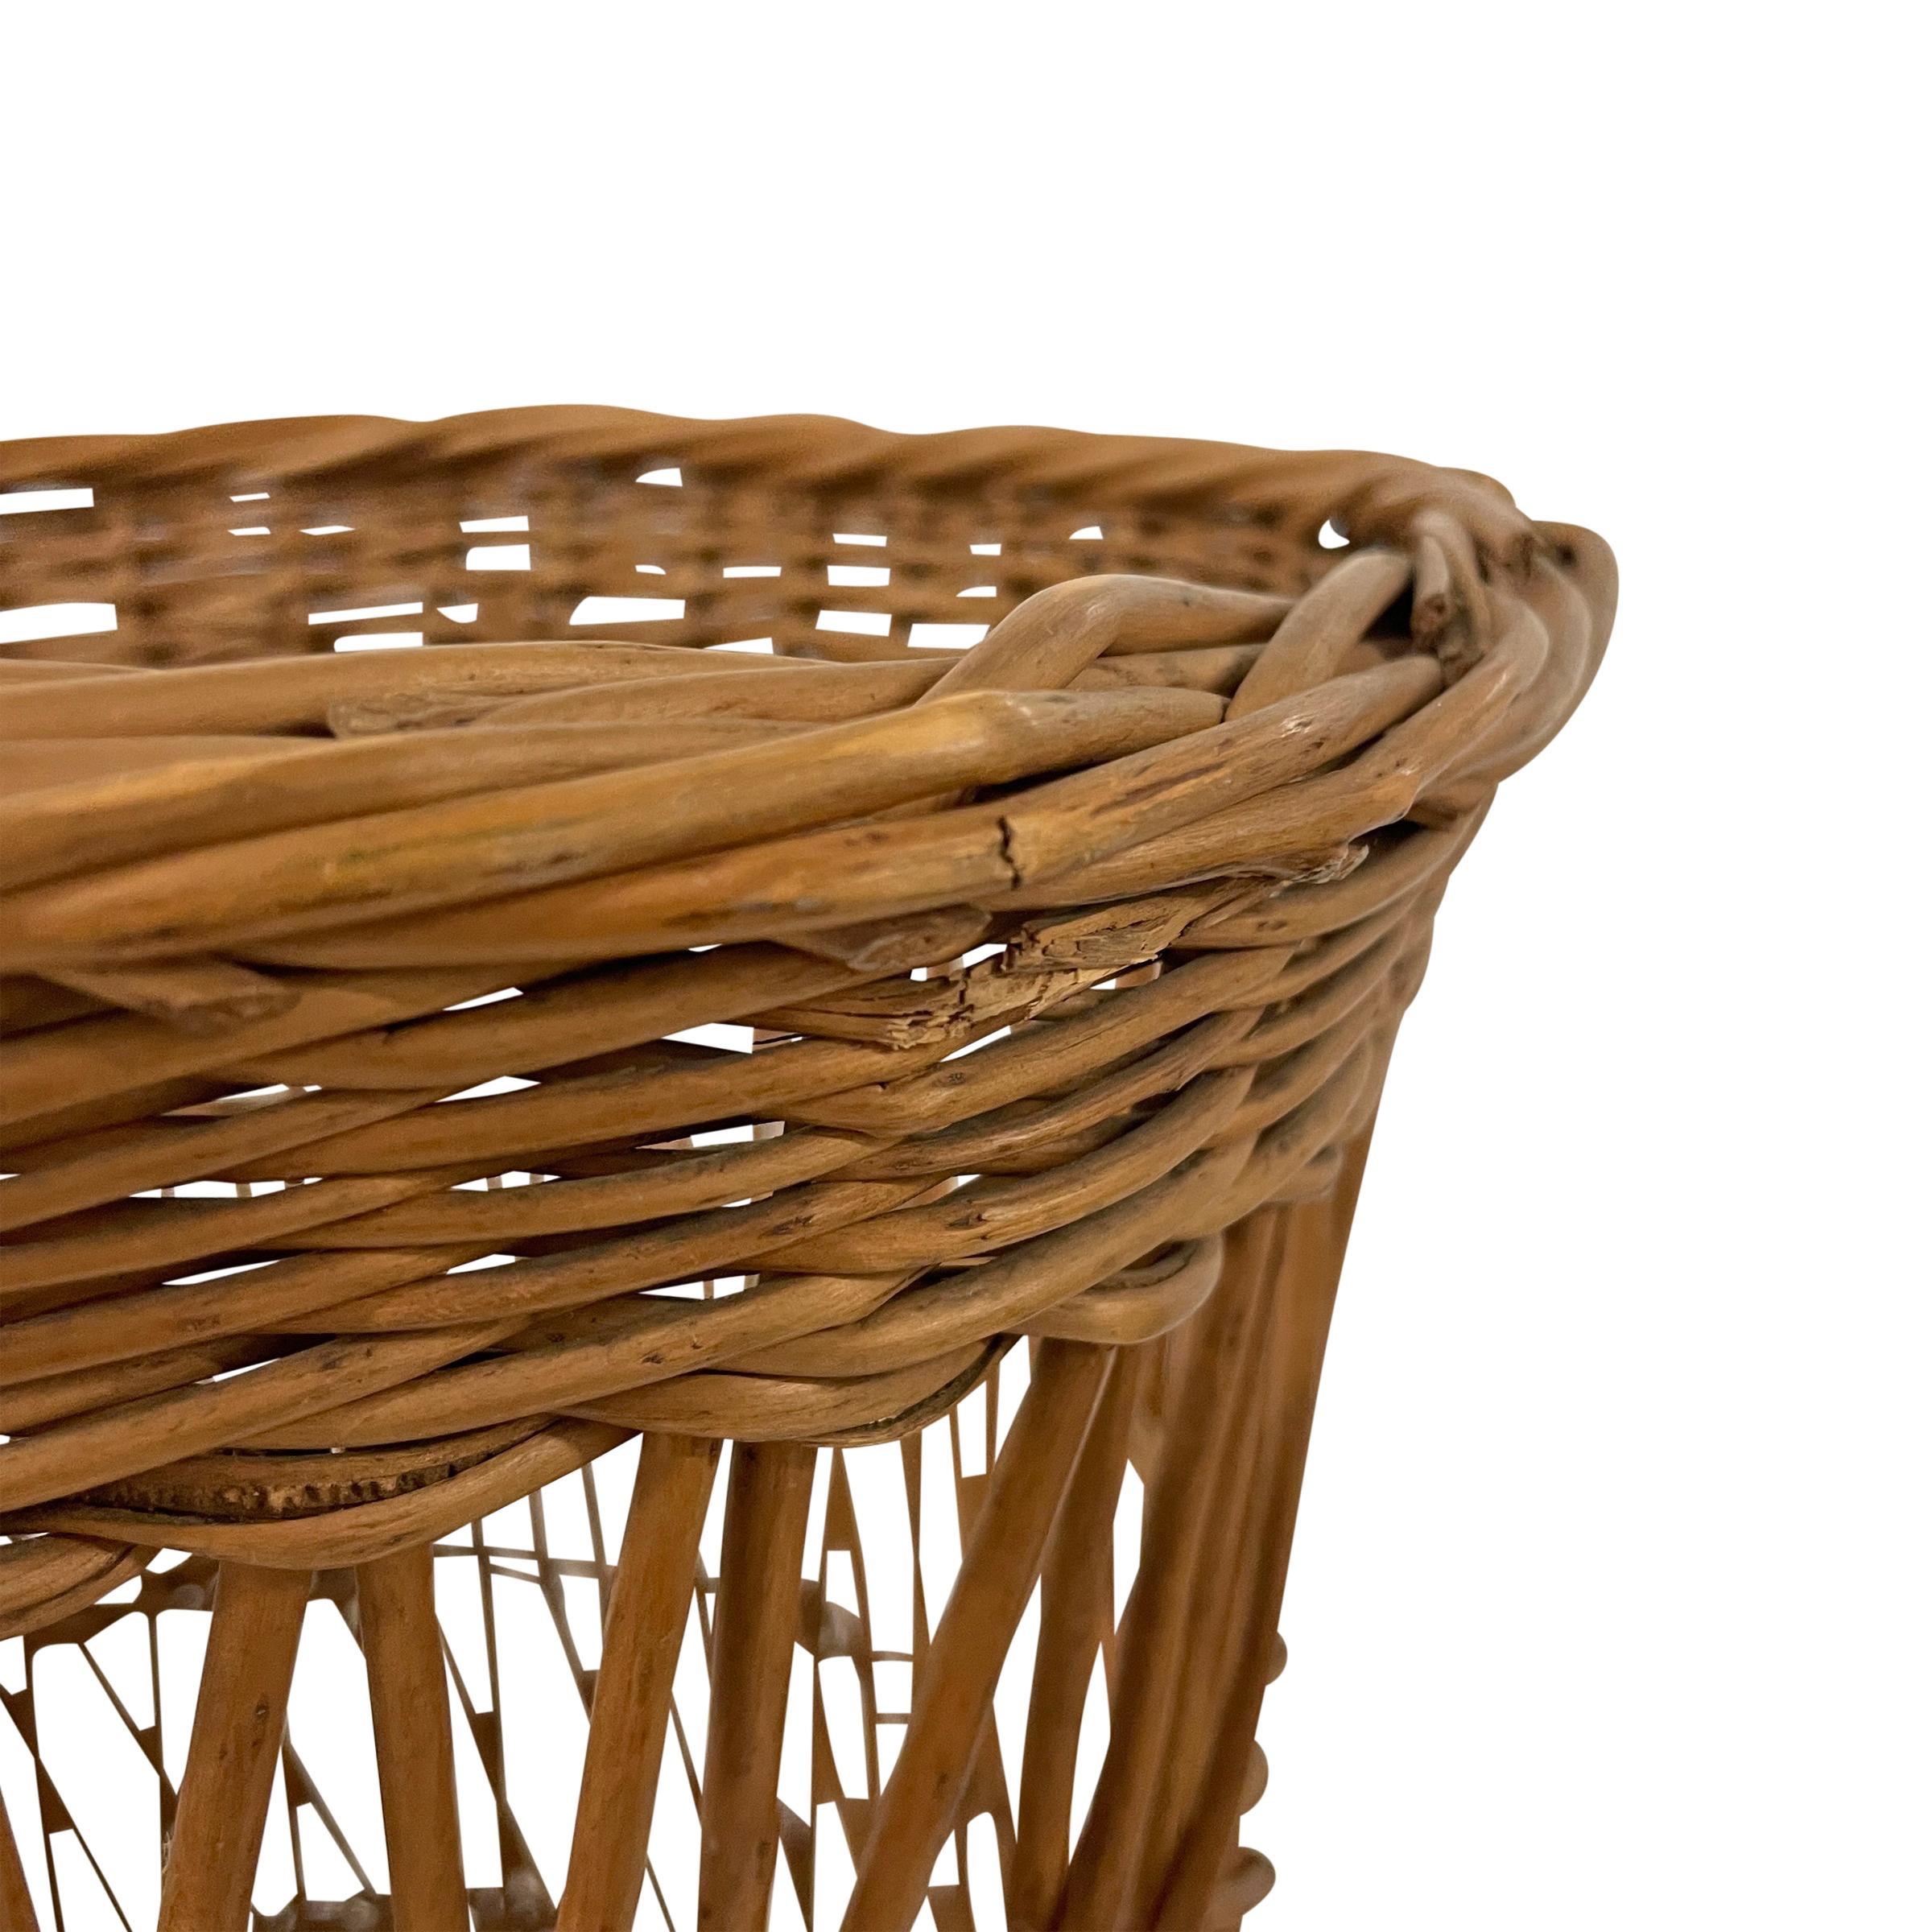 20th Century French Wicker Bakery Basket